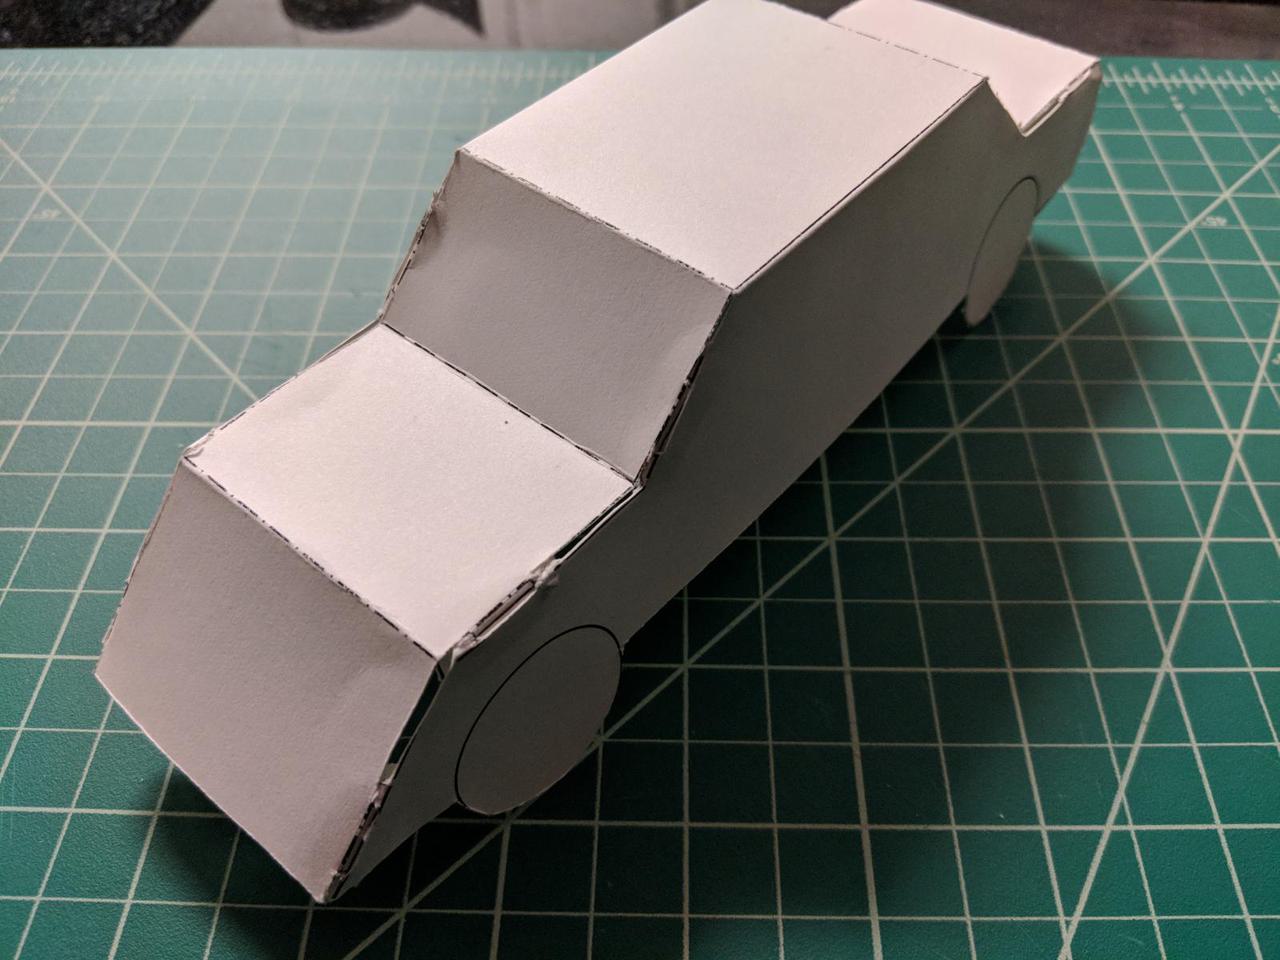 Closeup of assembled paper car sitting on a green cutting mat.